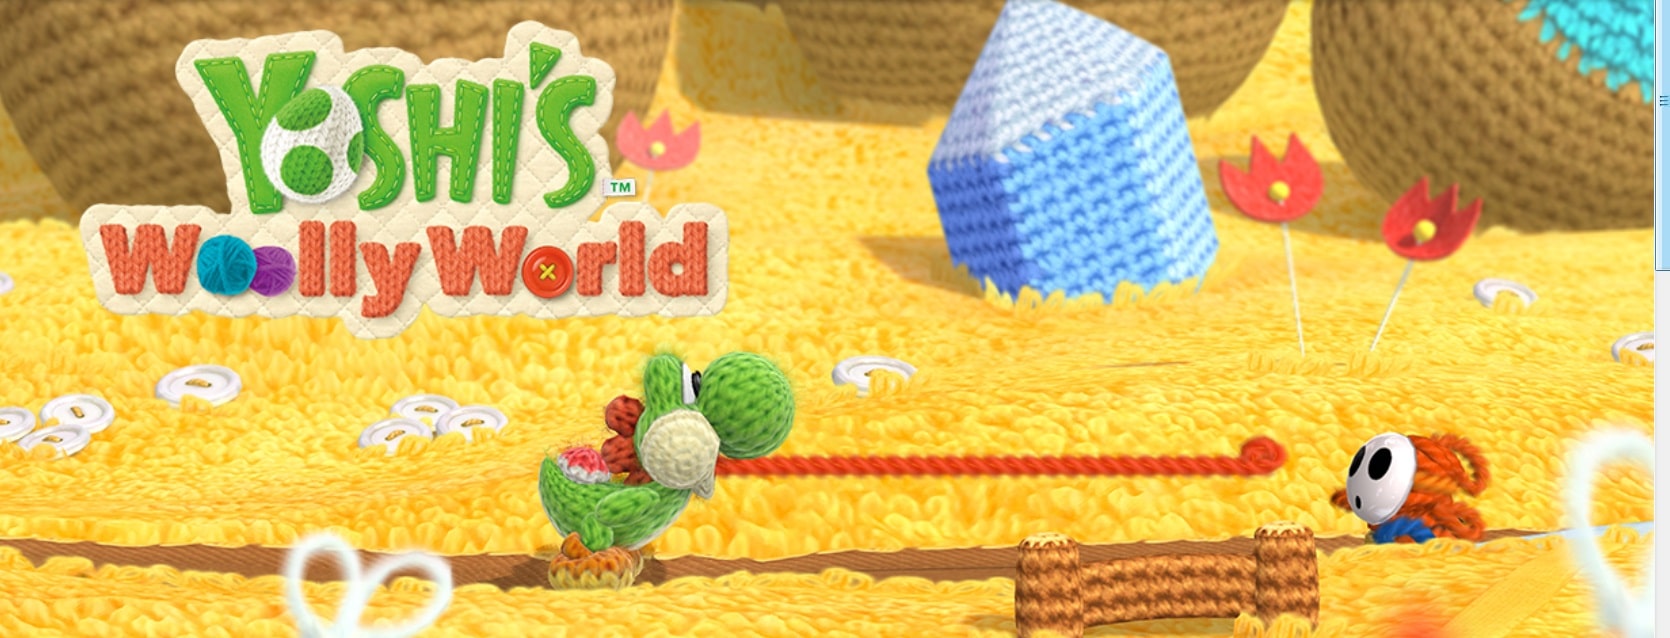 Yoshi's Woolly World Artwork Banner Official Wallpaper (Wii U)